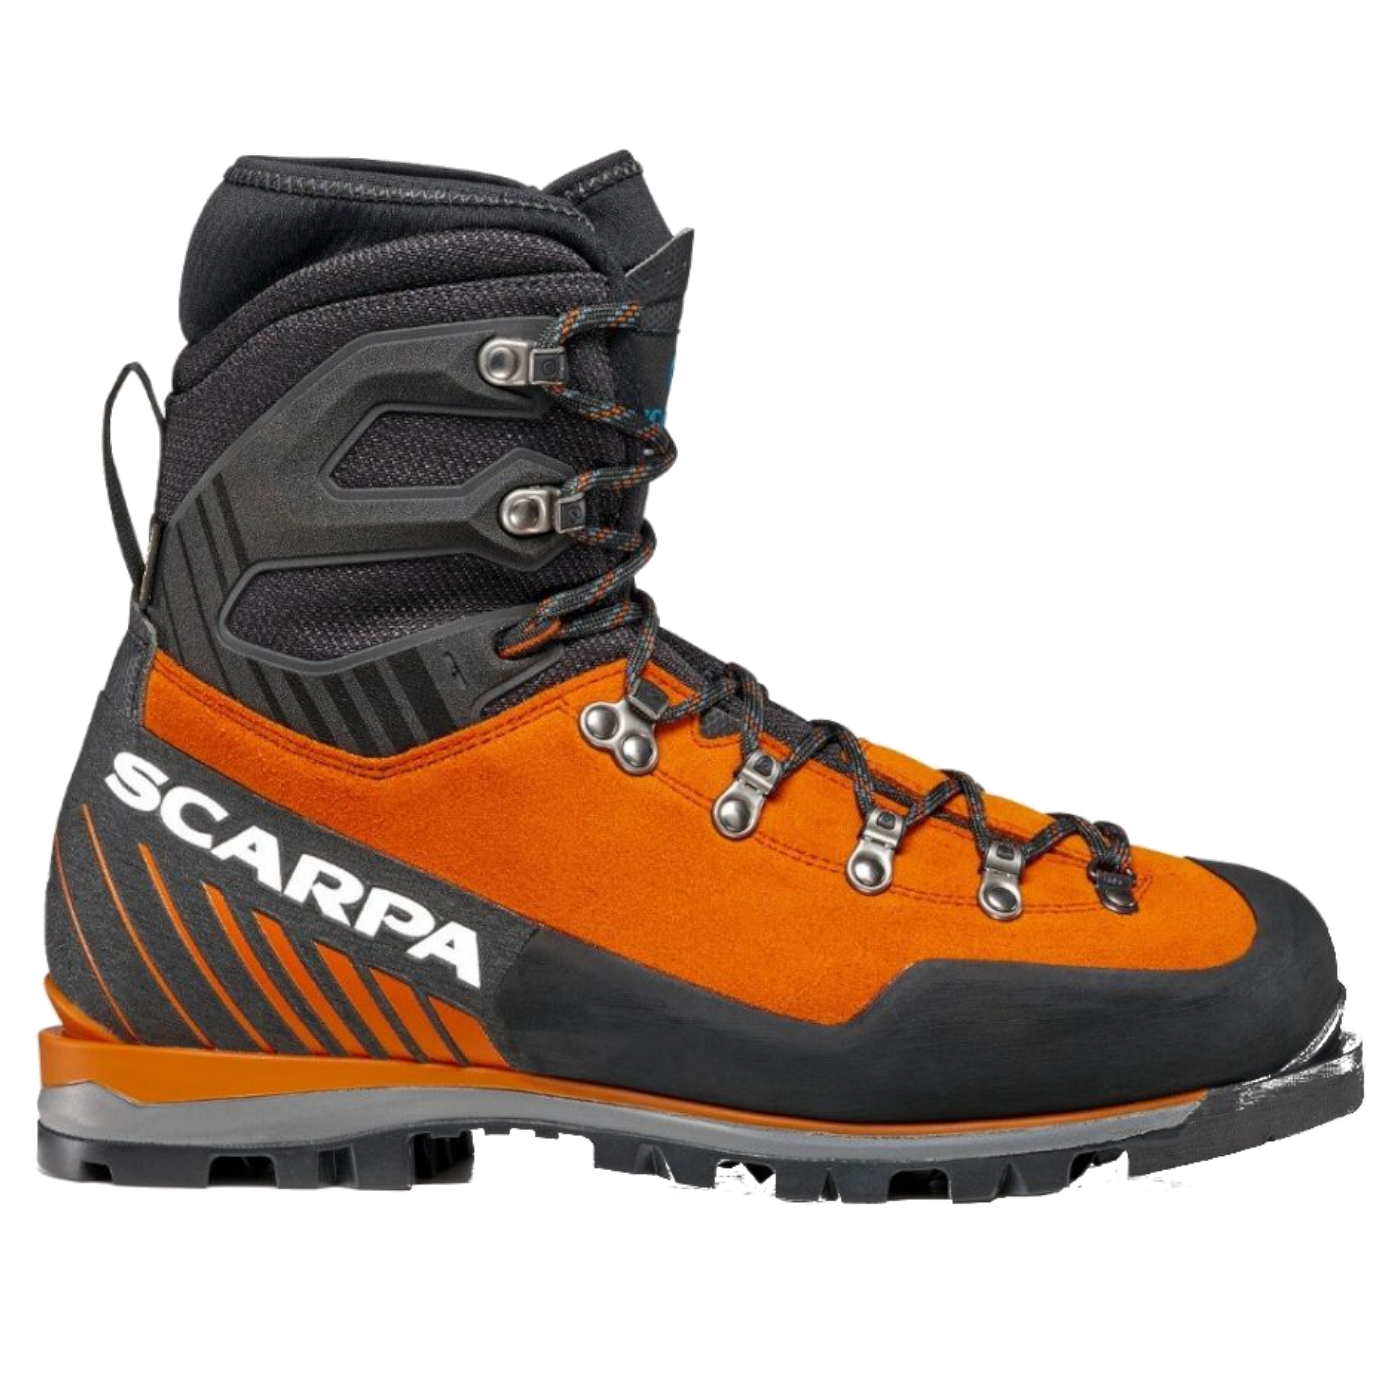 Scarpa Mont Blanc Pro GTX Size 45 Mountaineering Boot